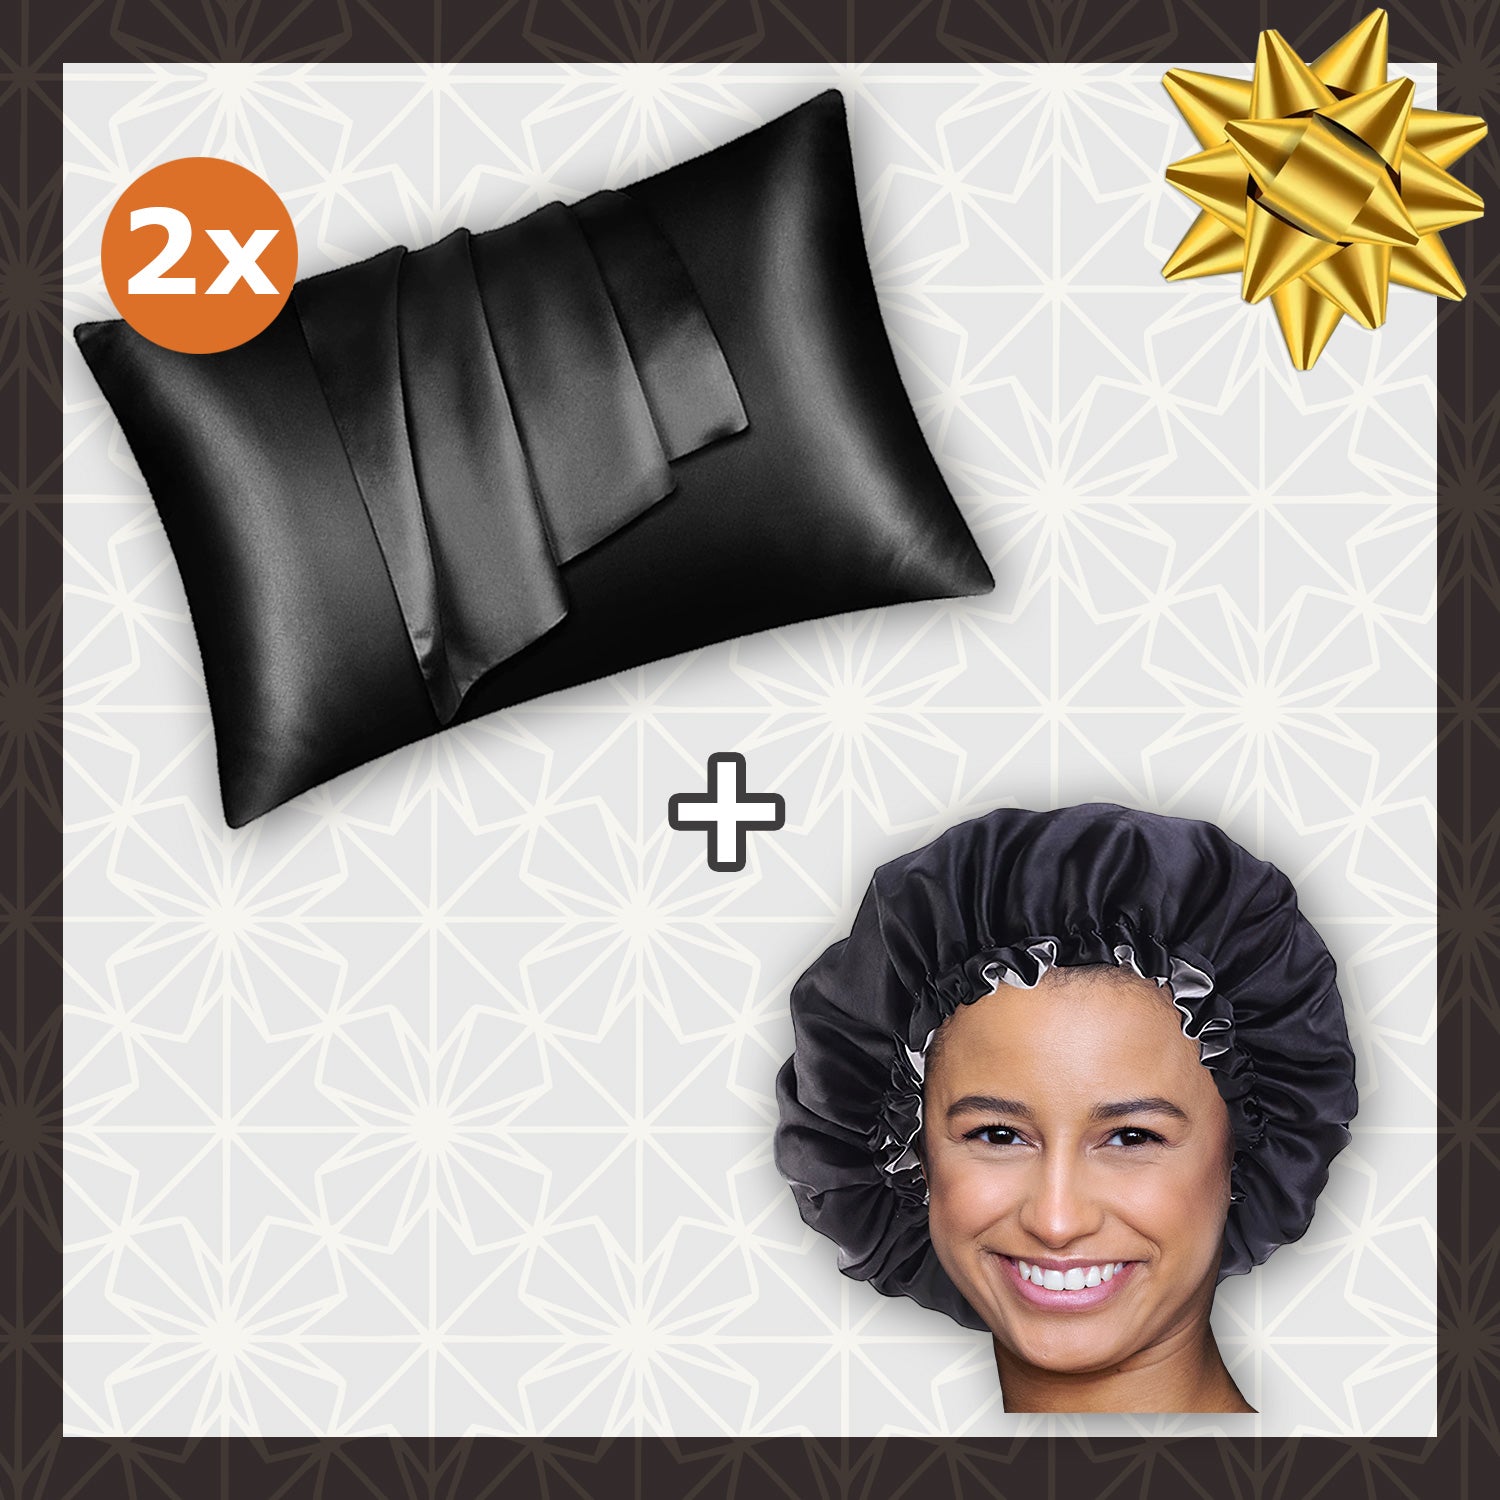 SATIN SET - Protect your hair & skin - Black Satin Hair Bonnet + 2